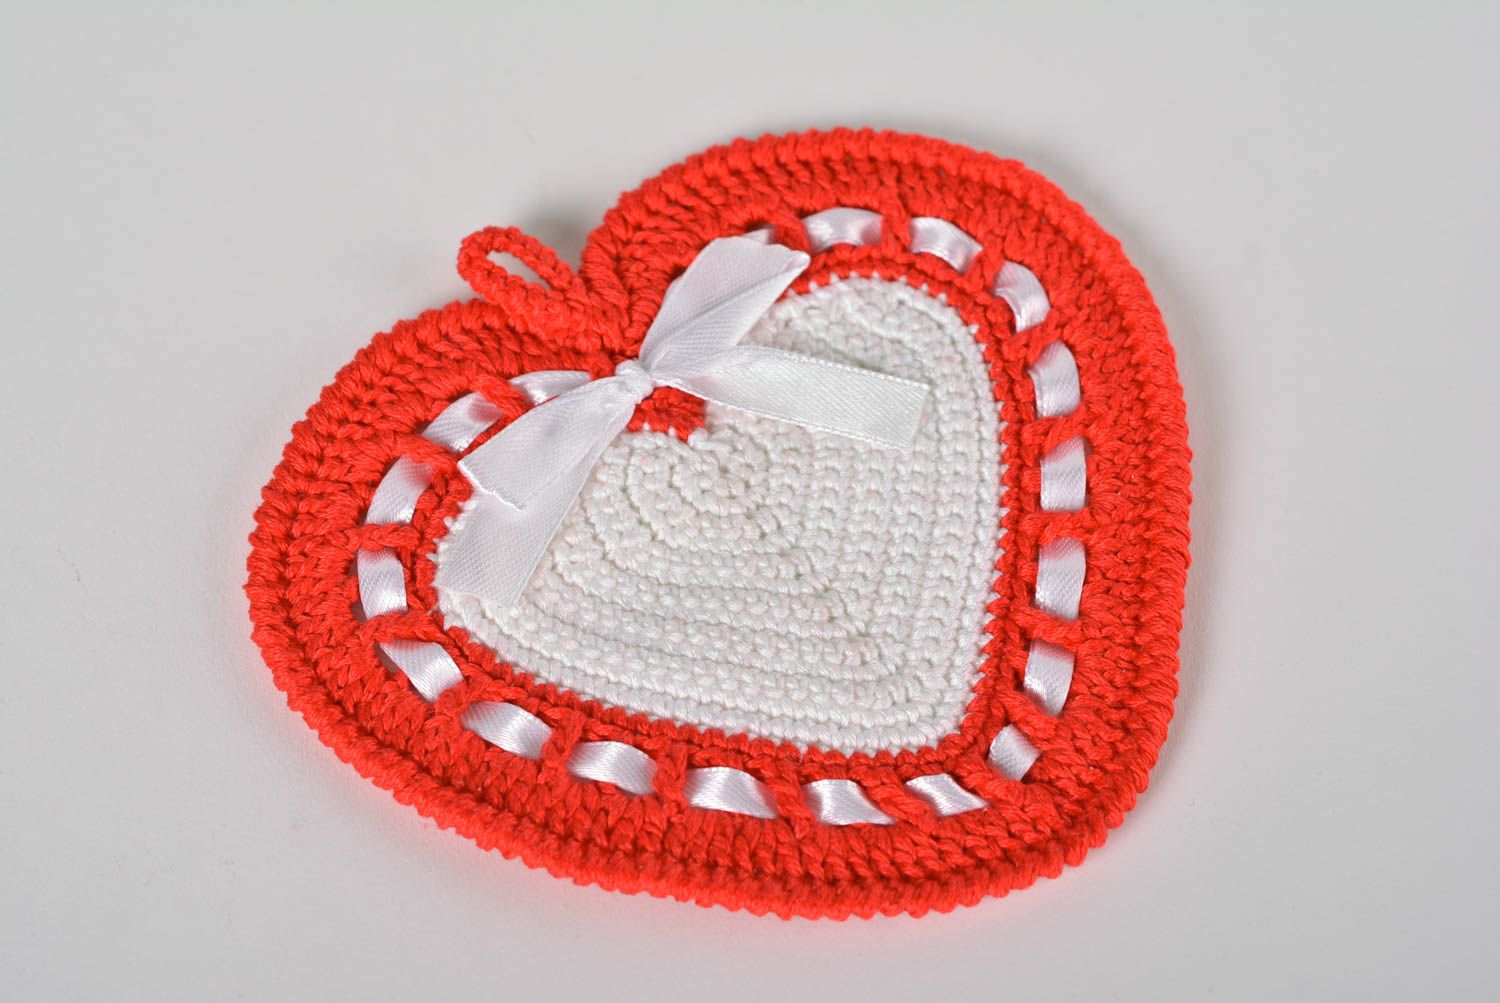 Handmade hot pad designer hot pad crochet hot pad kitchen accessory gift ideas photo 1